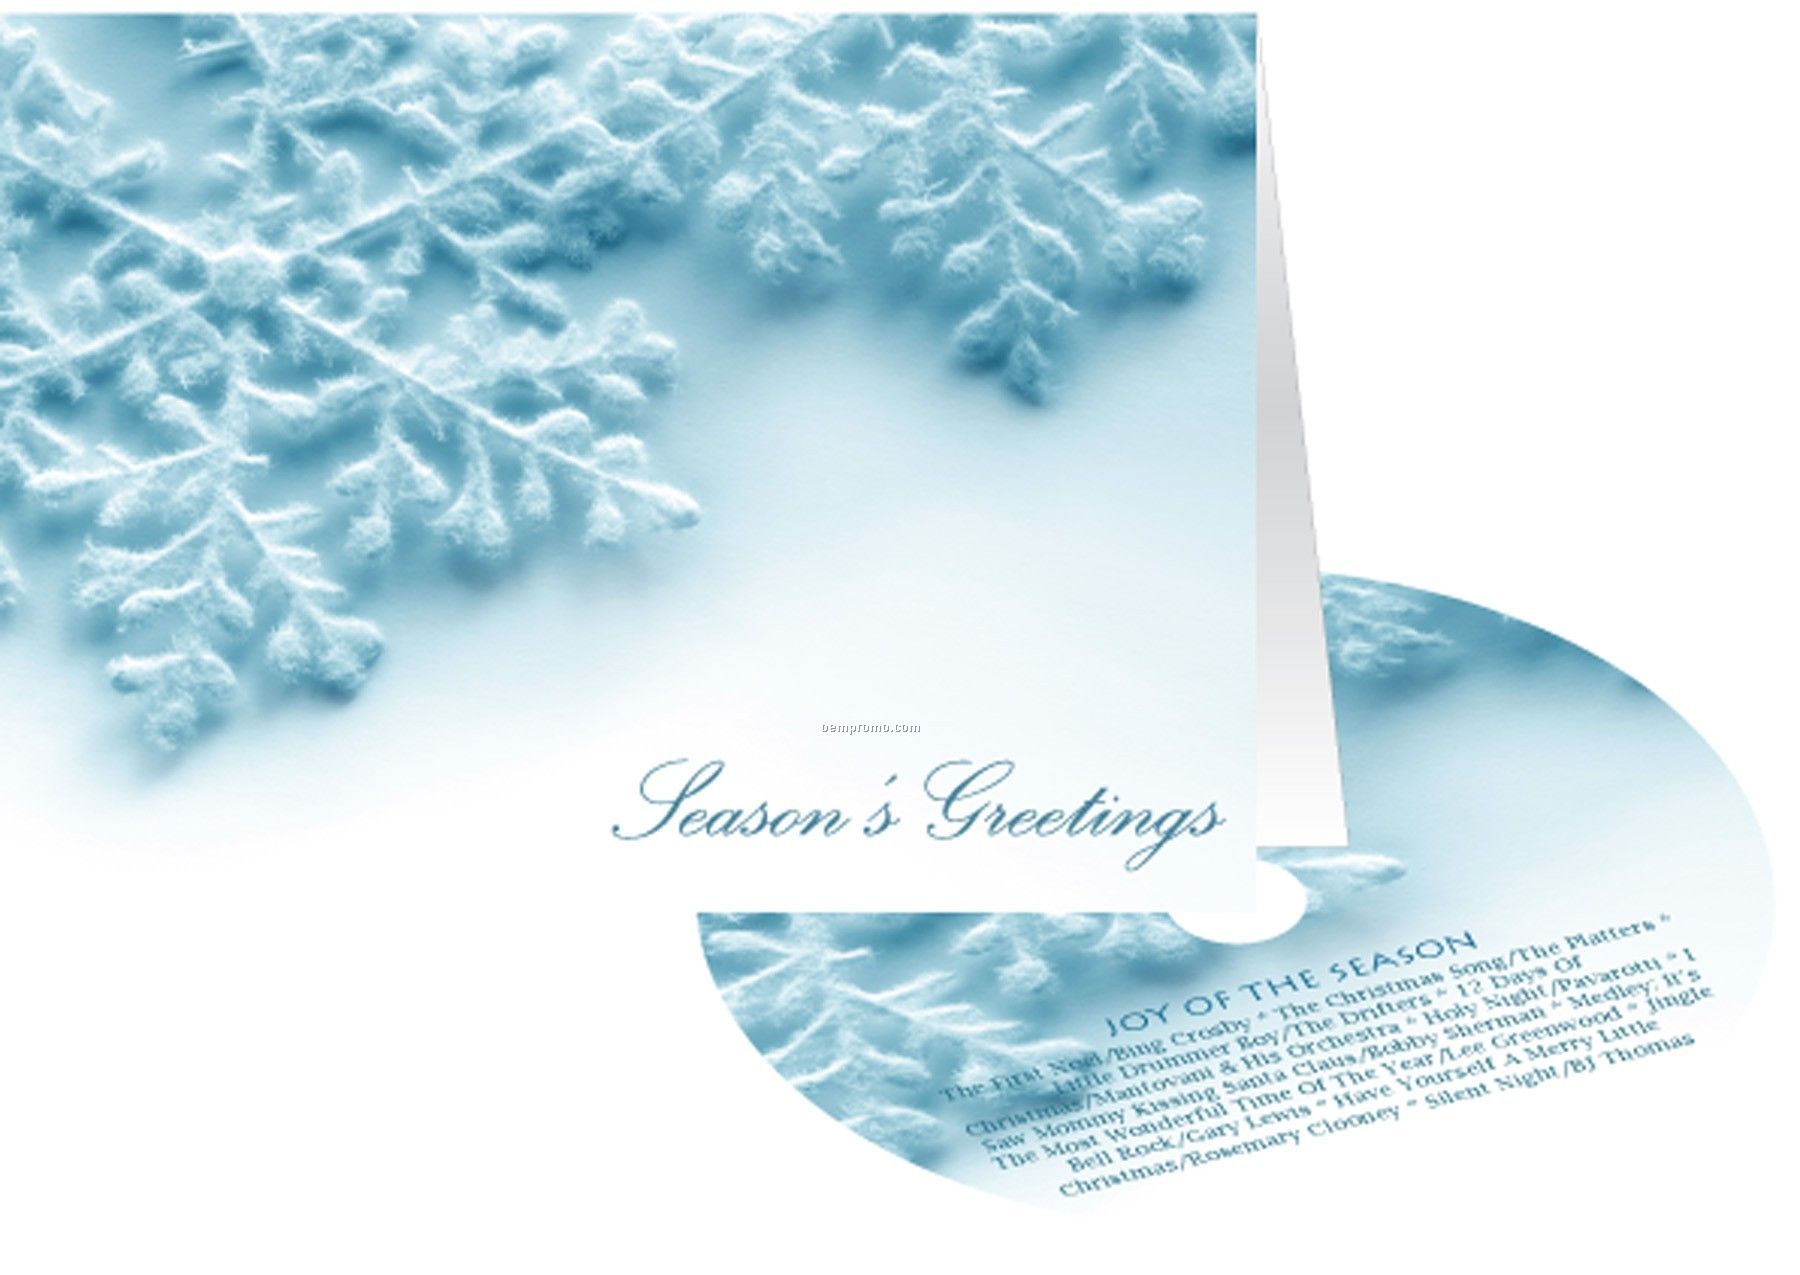 Snowflakes Season's Greetings Holiday Card With Matching CD